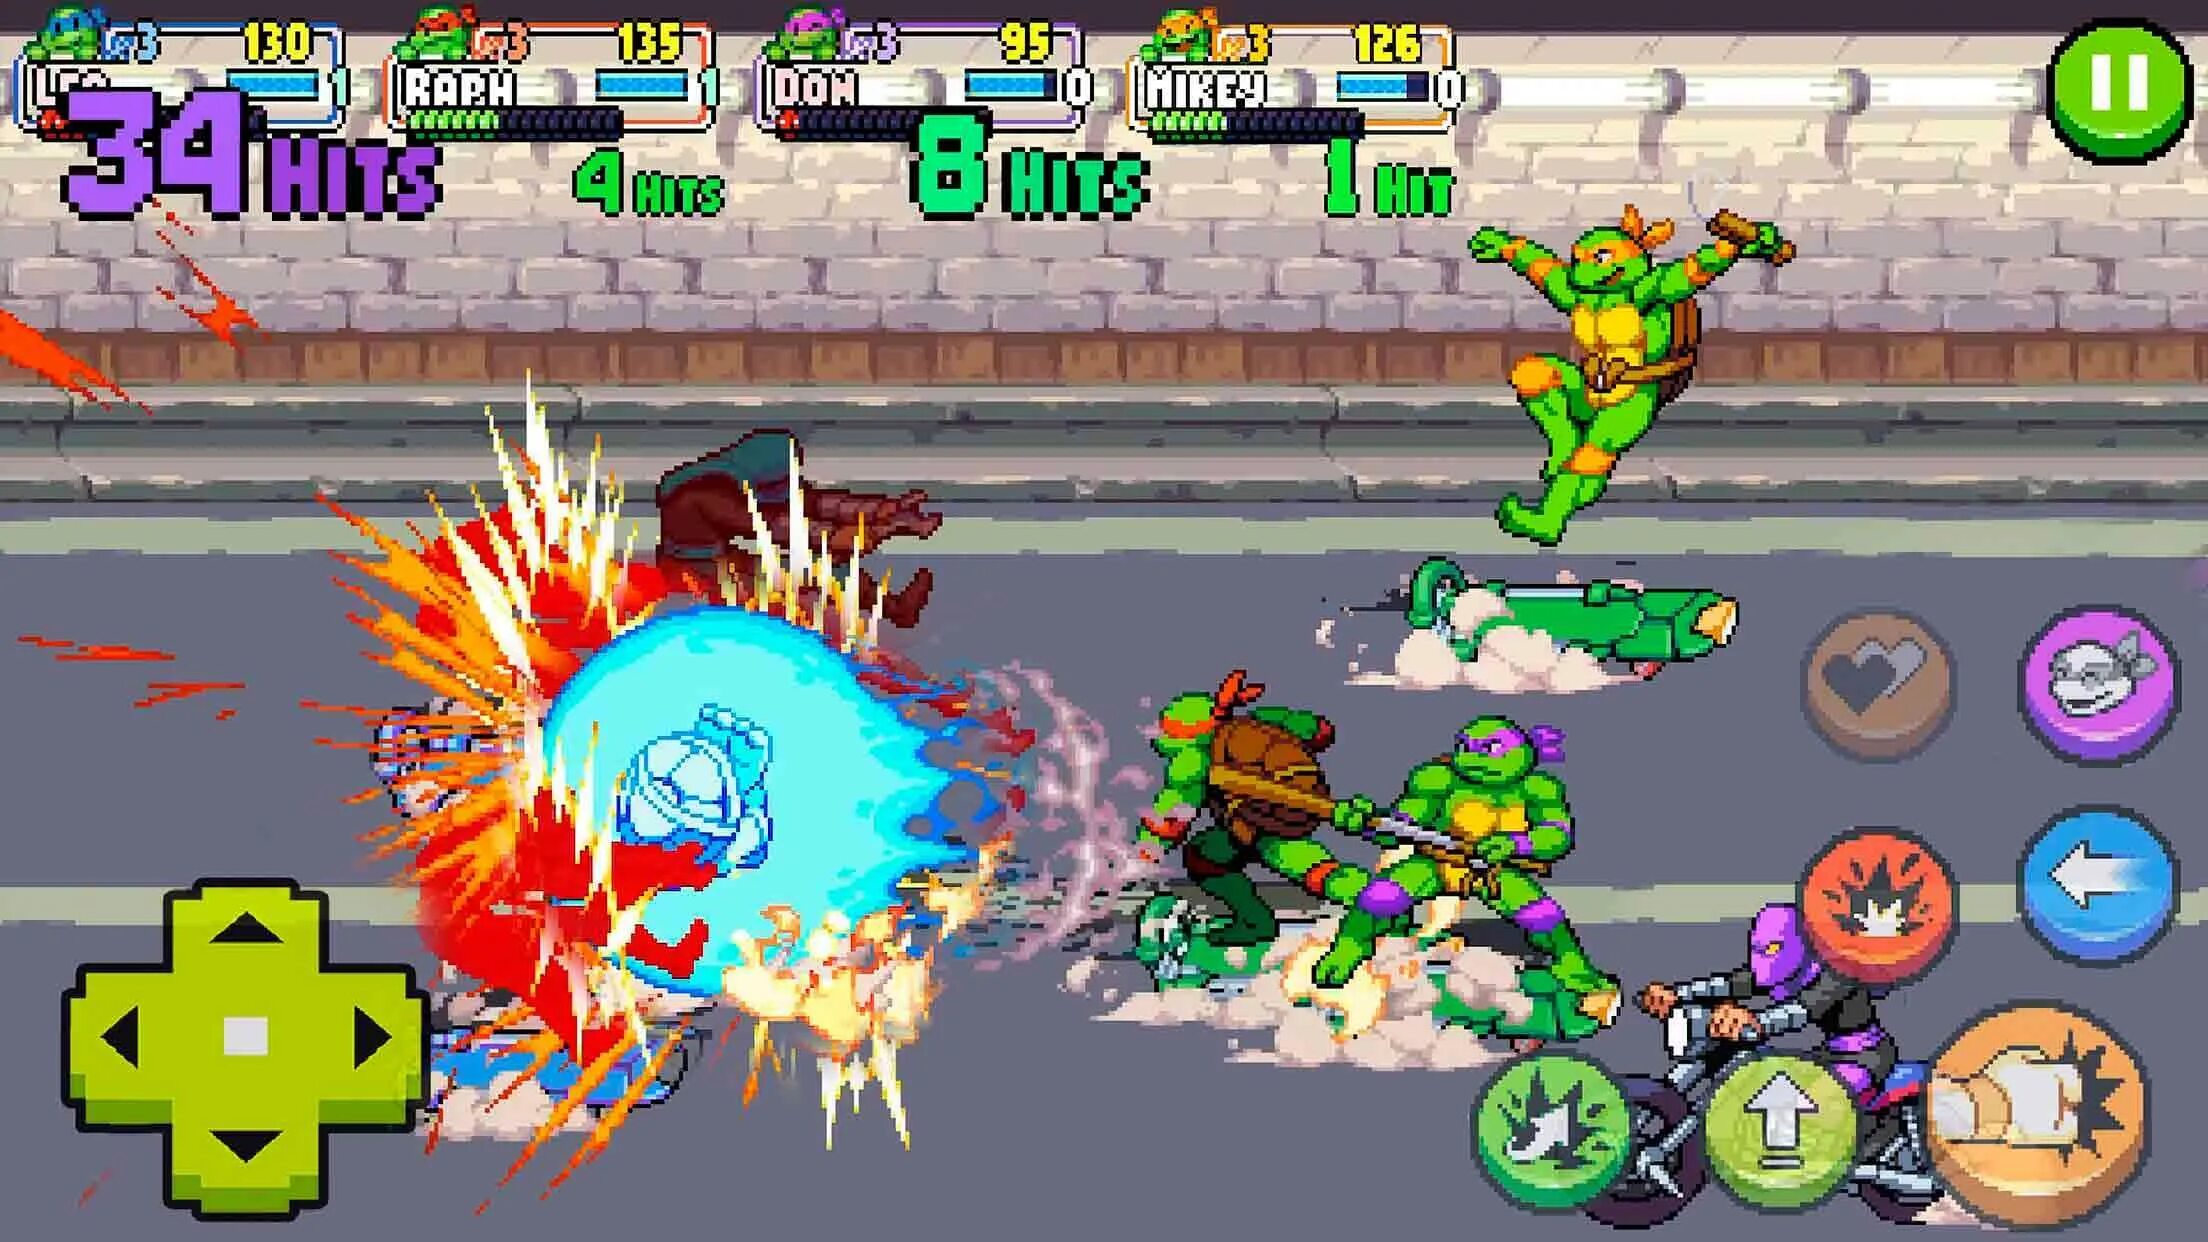 Tmnt shredder android. TMNT Shredder Revenge. Teenage Mutant Ninja Turtles (игра, 2003). TMNT Mutant Mayhem Shredder. Черепашки ниндзя игра на Икс бокс.